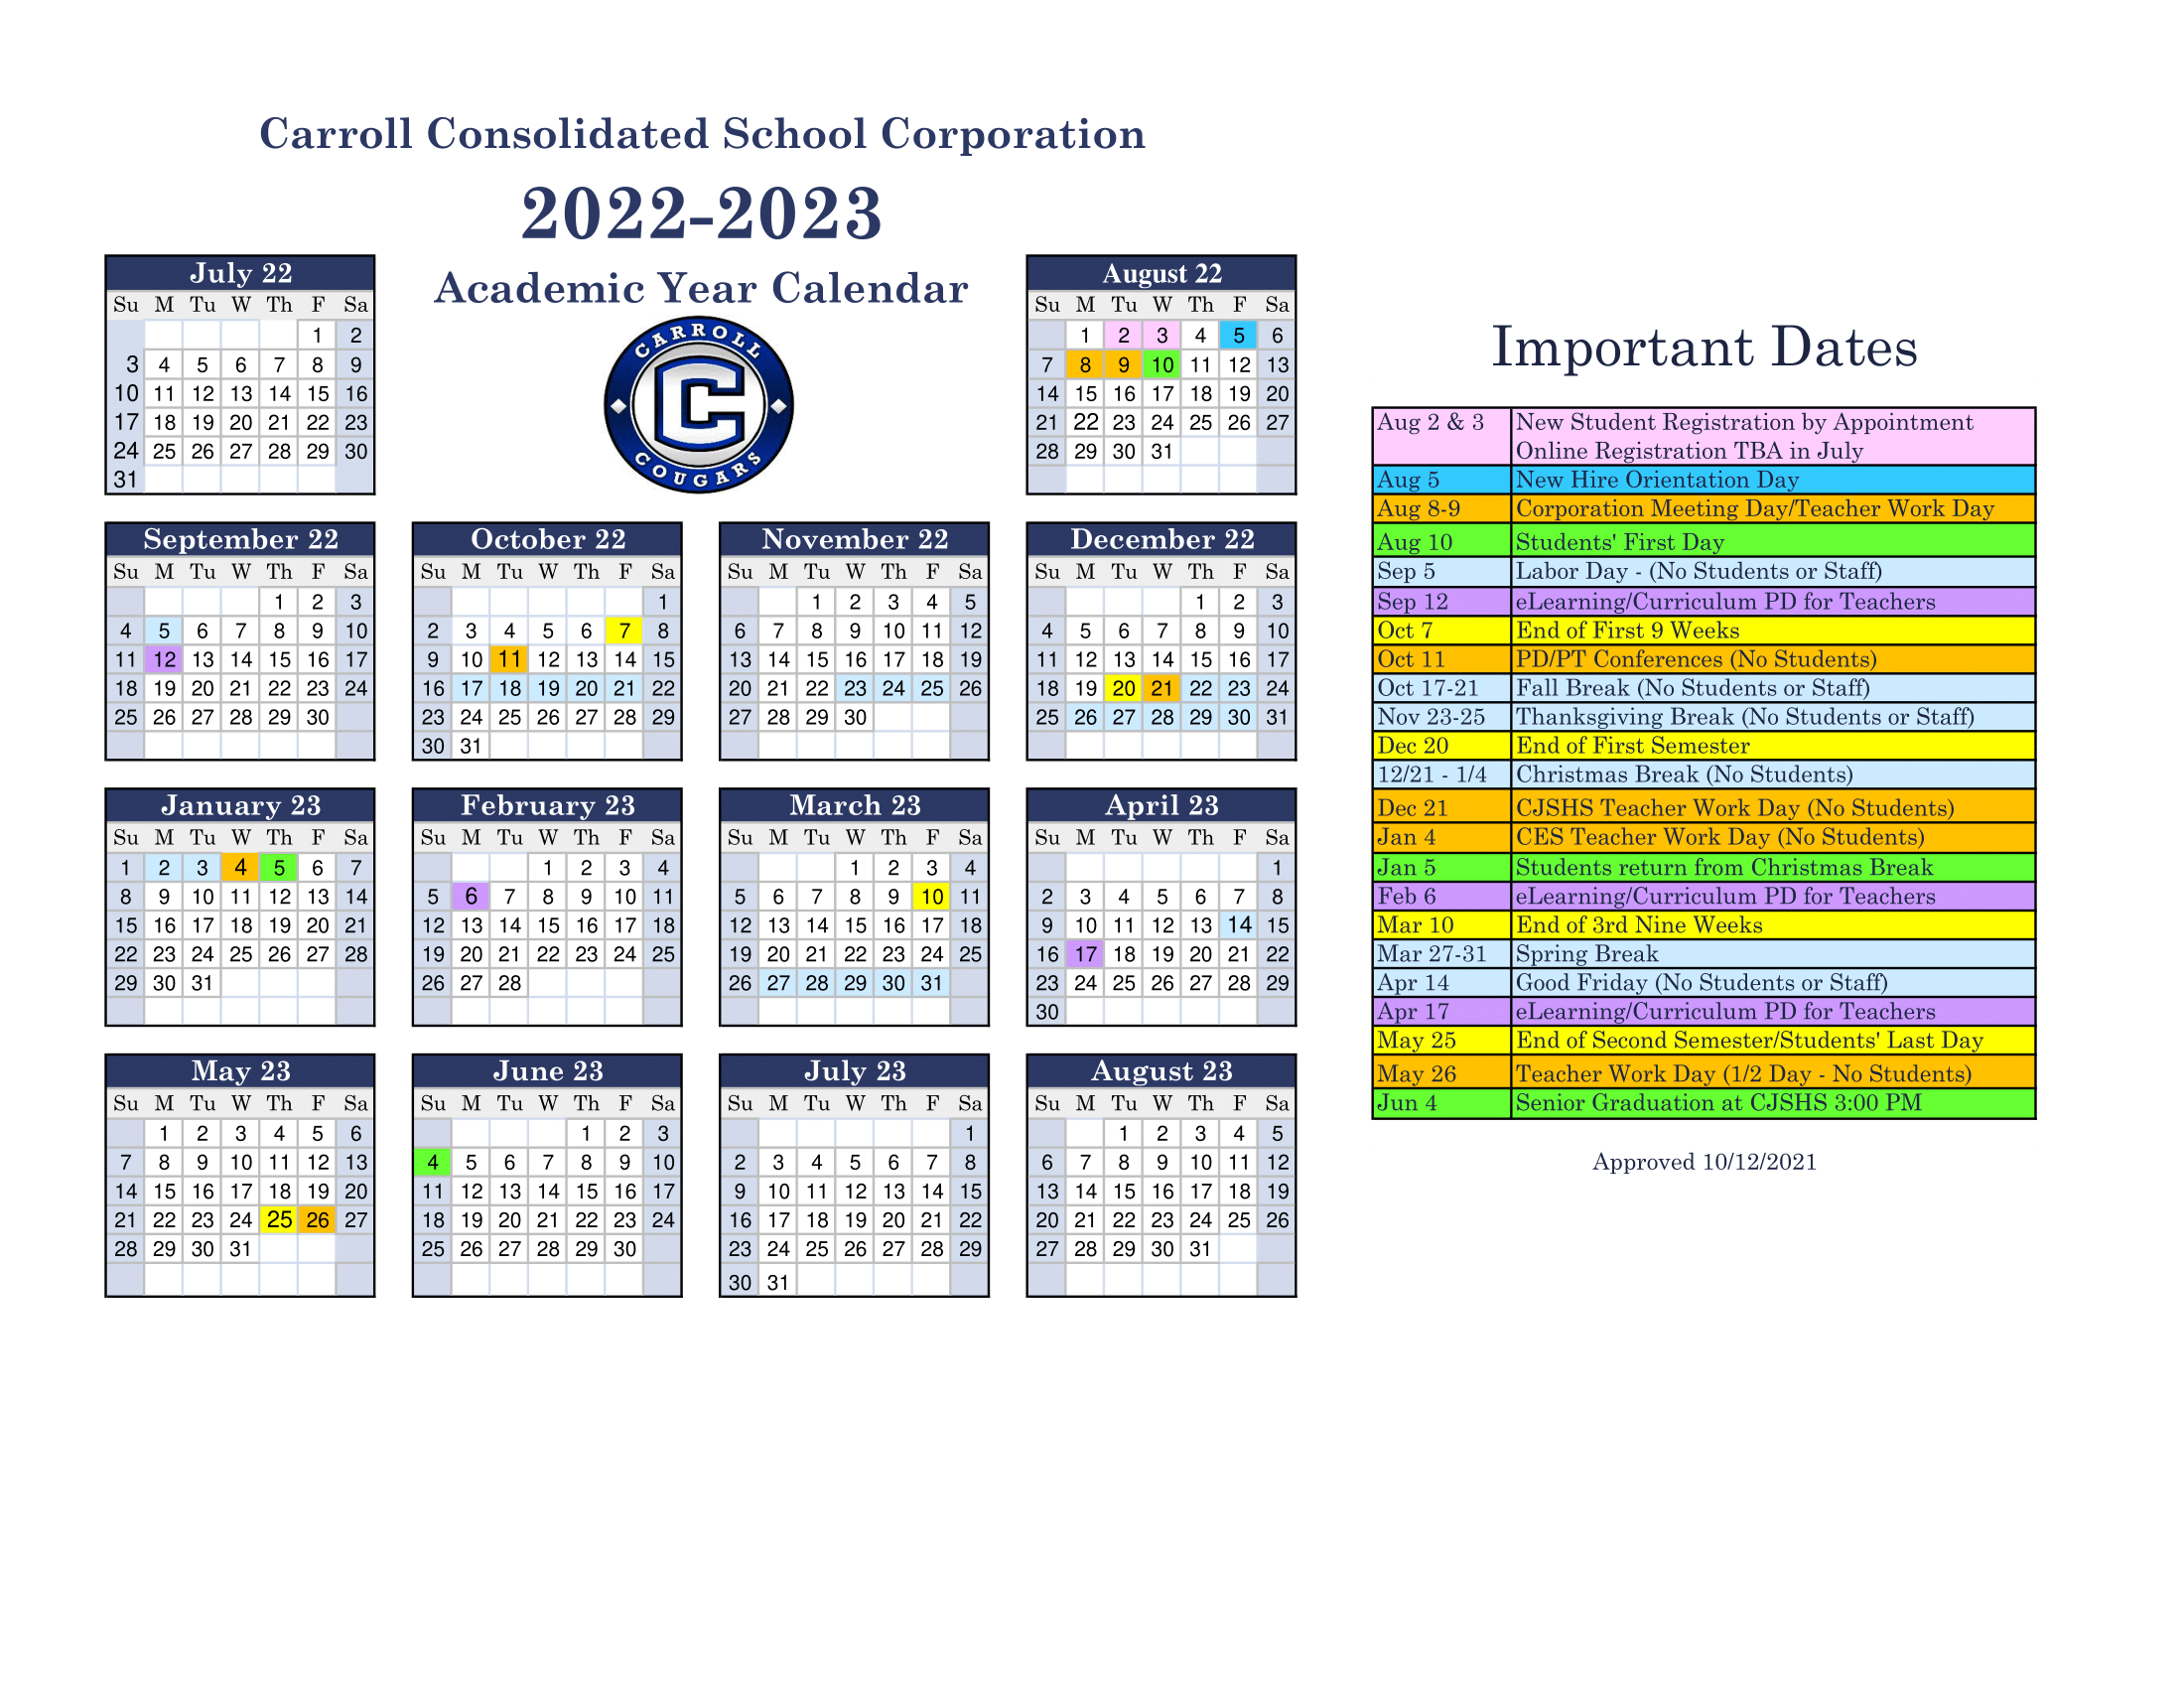 School Calendar Info | Carroll Consolidated School Corporation